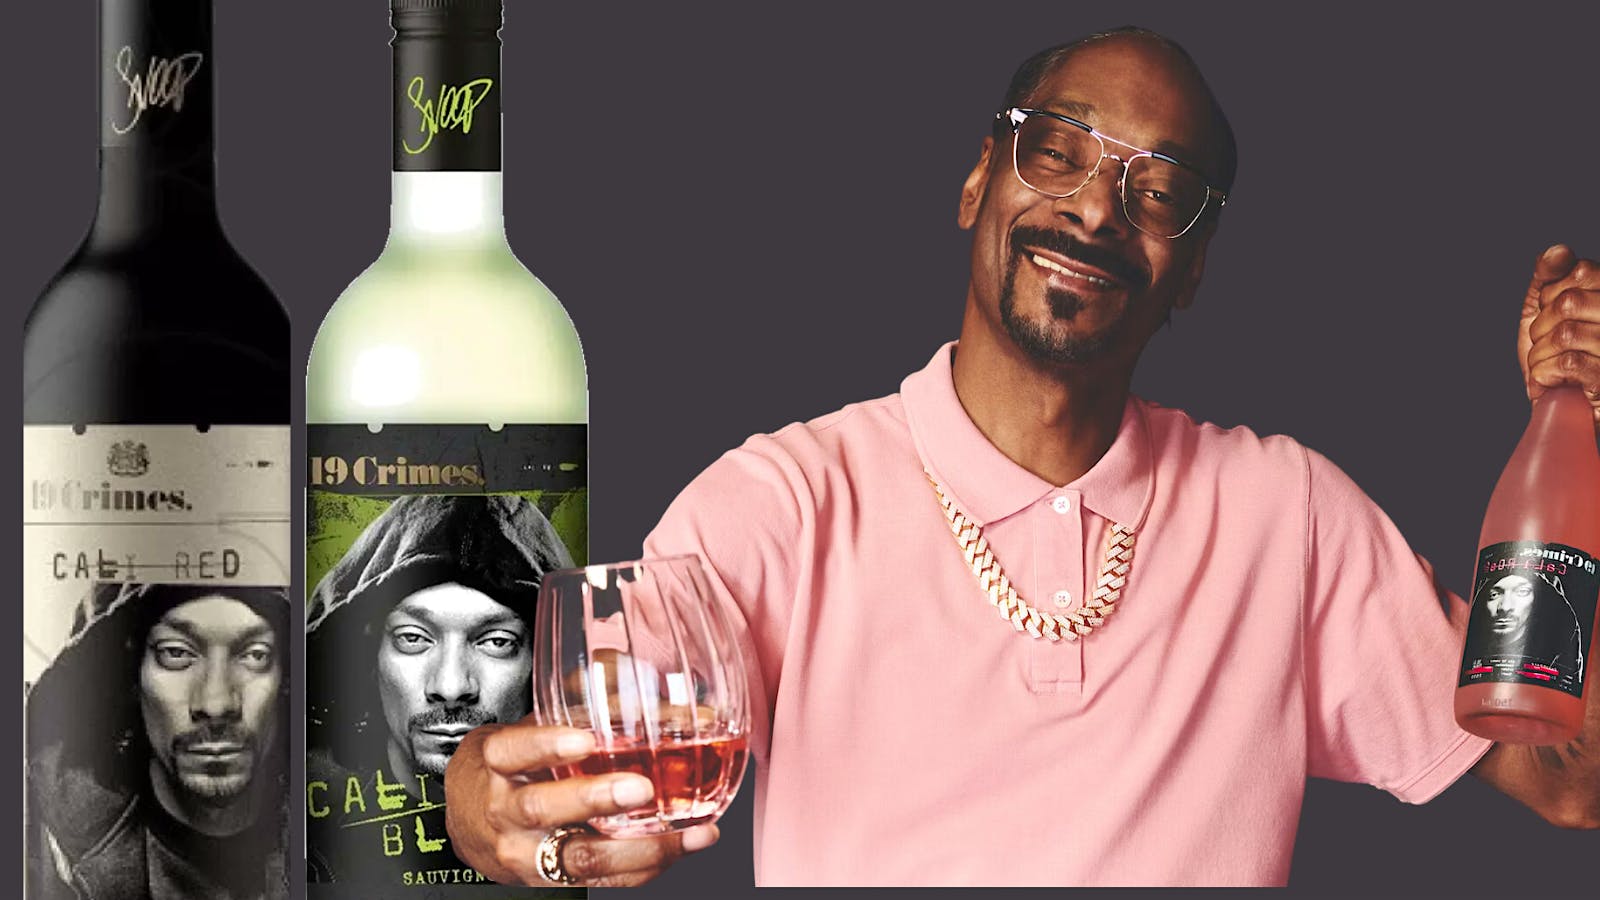 19 Crimes Snoop Dogg Cali Red Blend